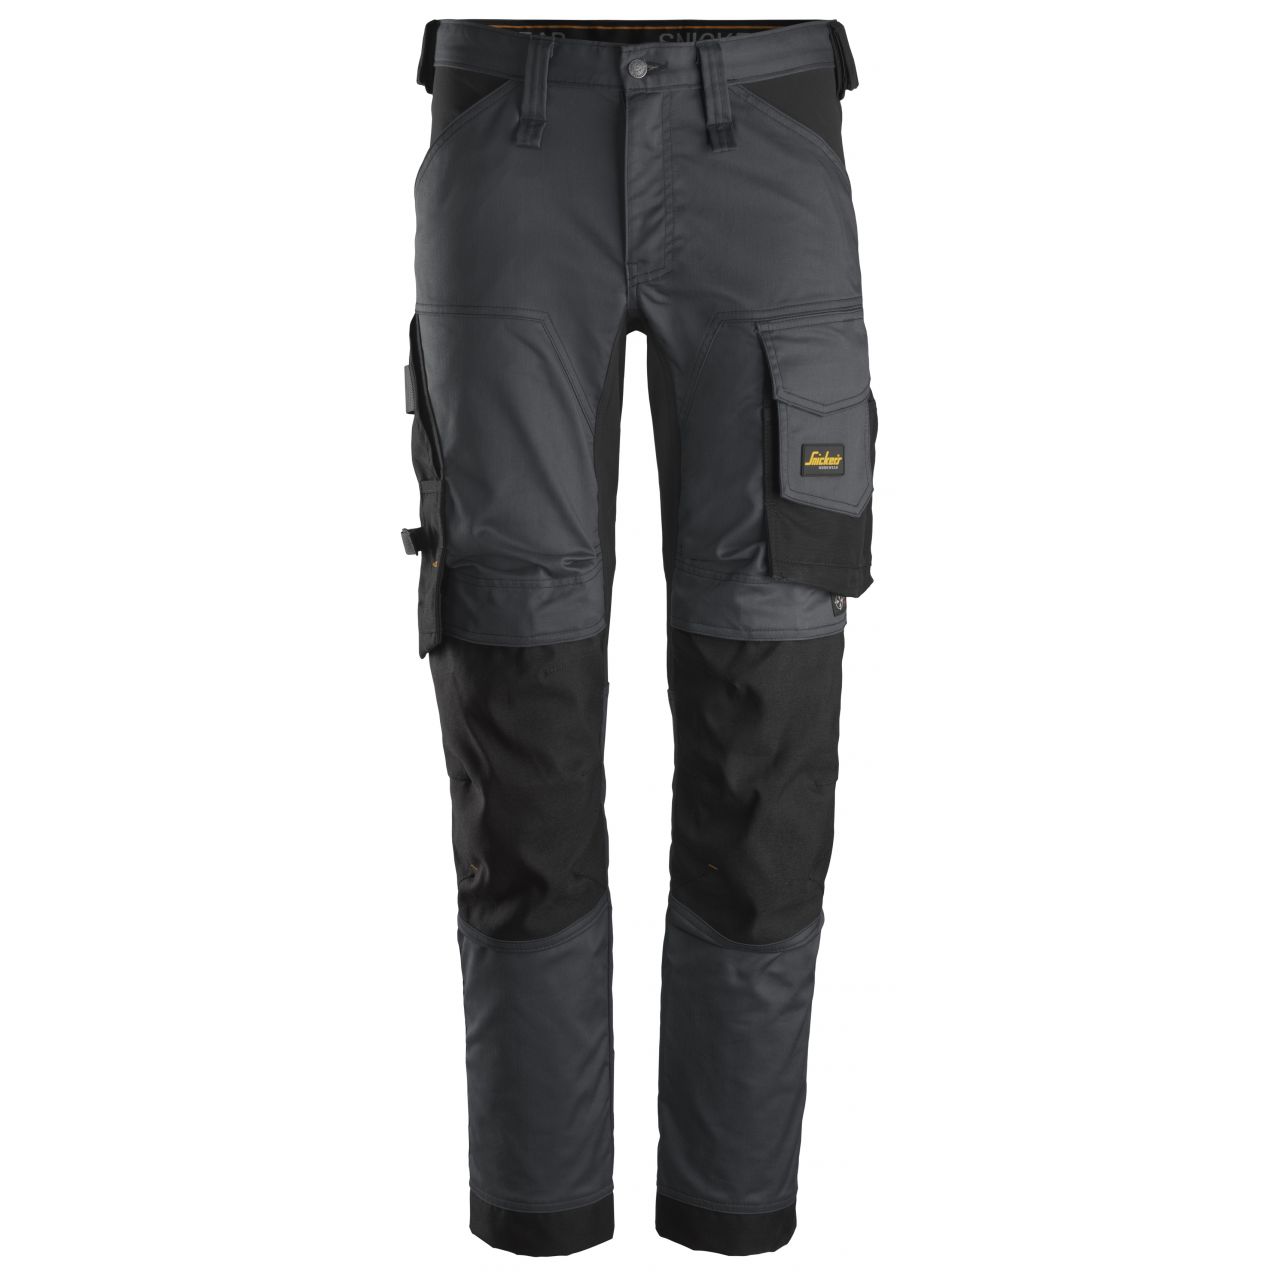 Pantalones elásticos AllroundWork Gris Acero-Negro talla 258